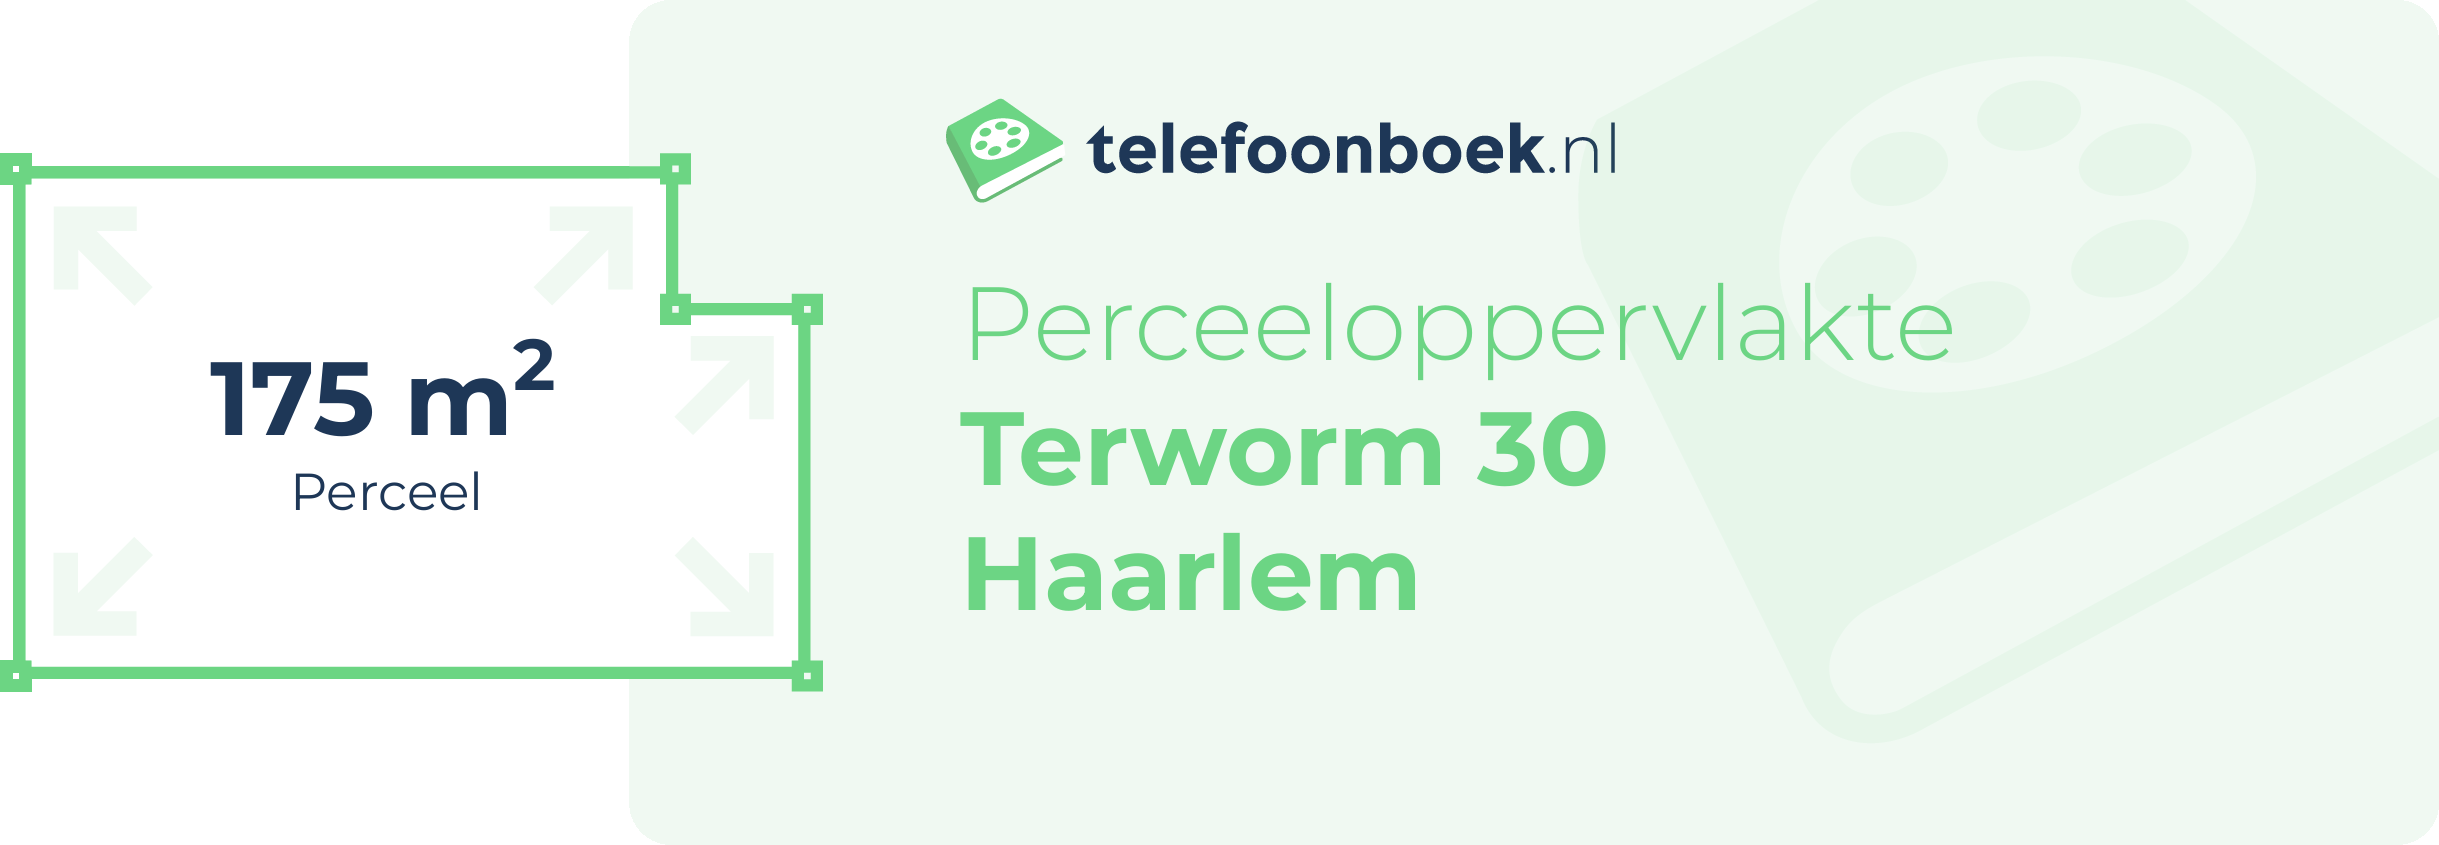 Perceeloppervlakte Terworm 30 Haarlem